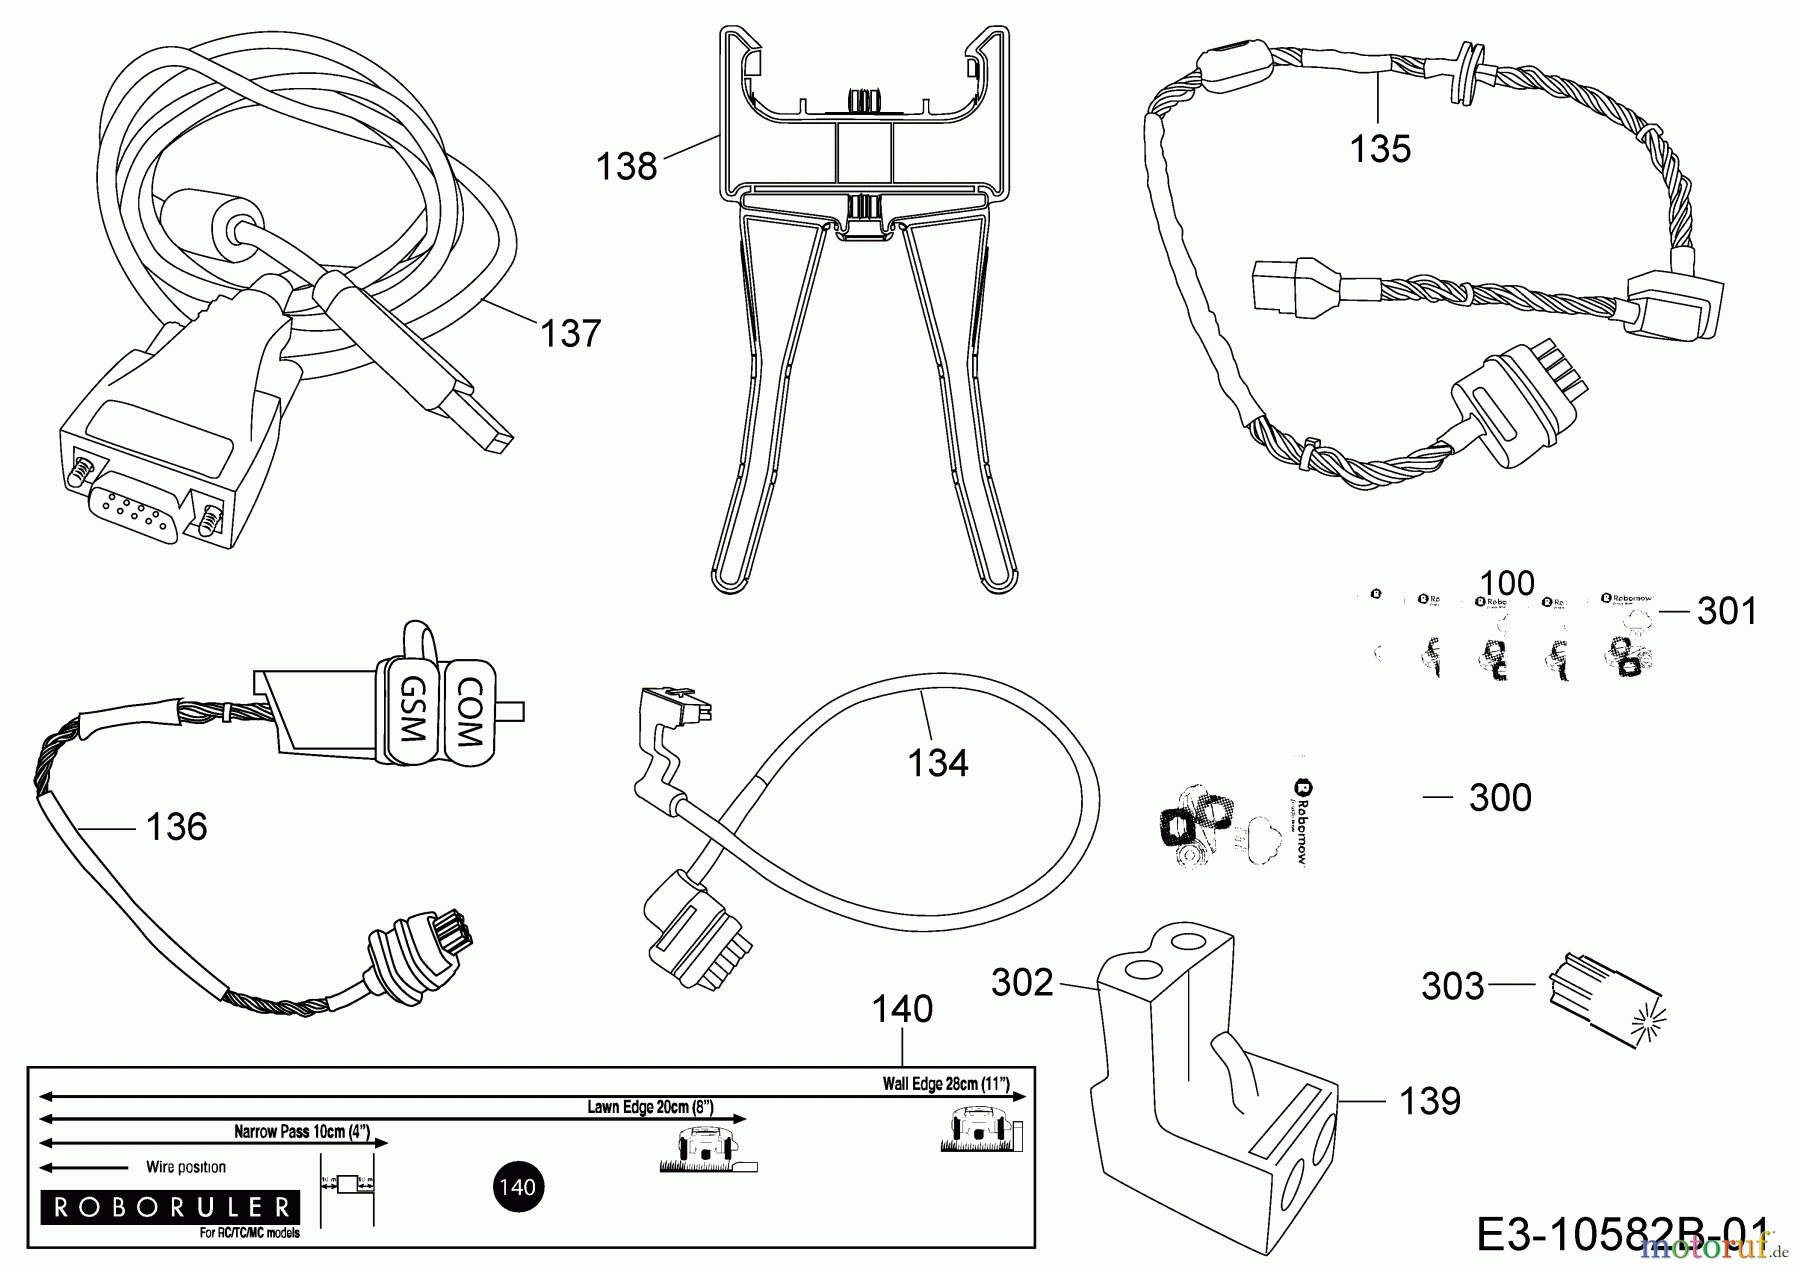  Robomow Mähroboter RC312U (Red) PRD7012YR  (2017) Kabel, Kabelanschluß, Regensensor, Werkzeug